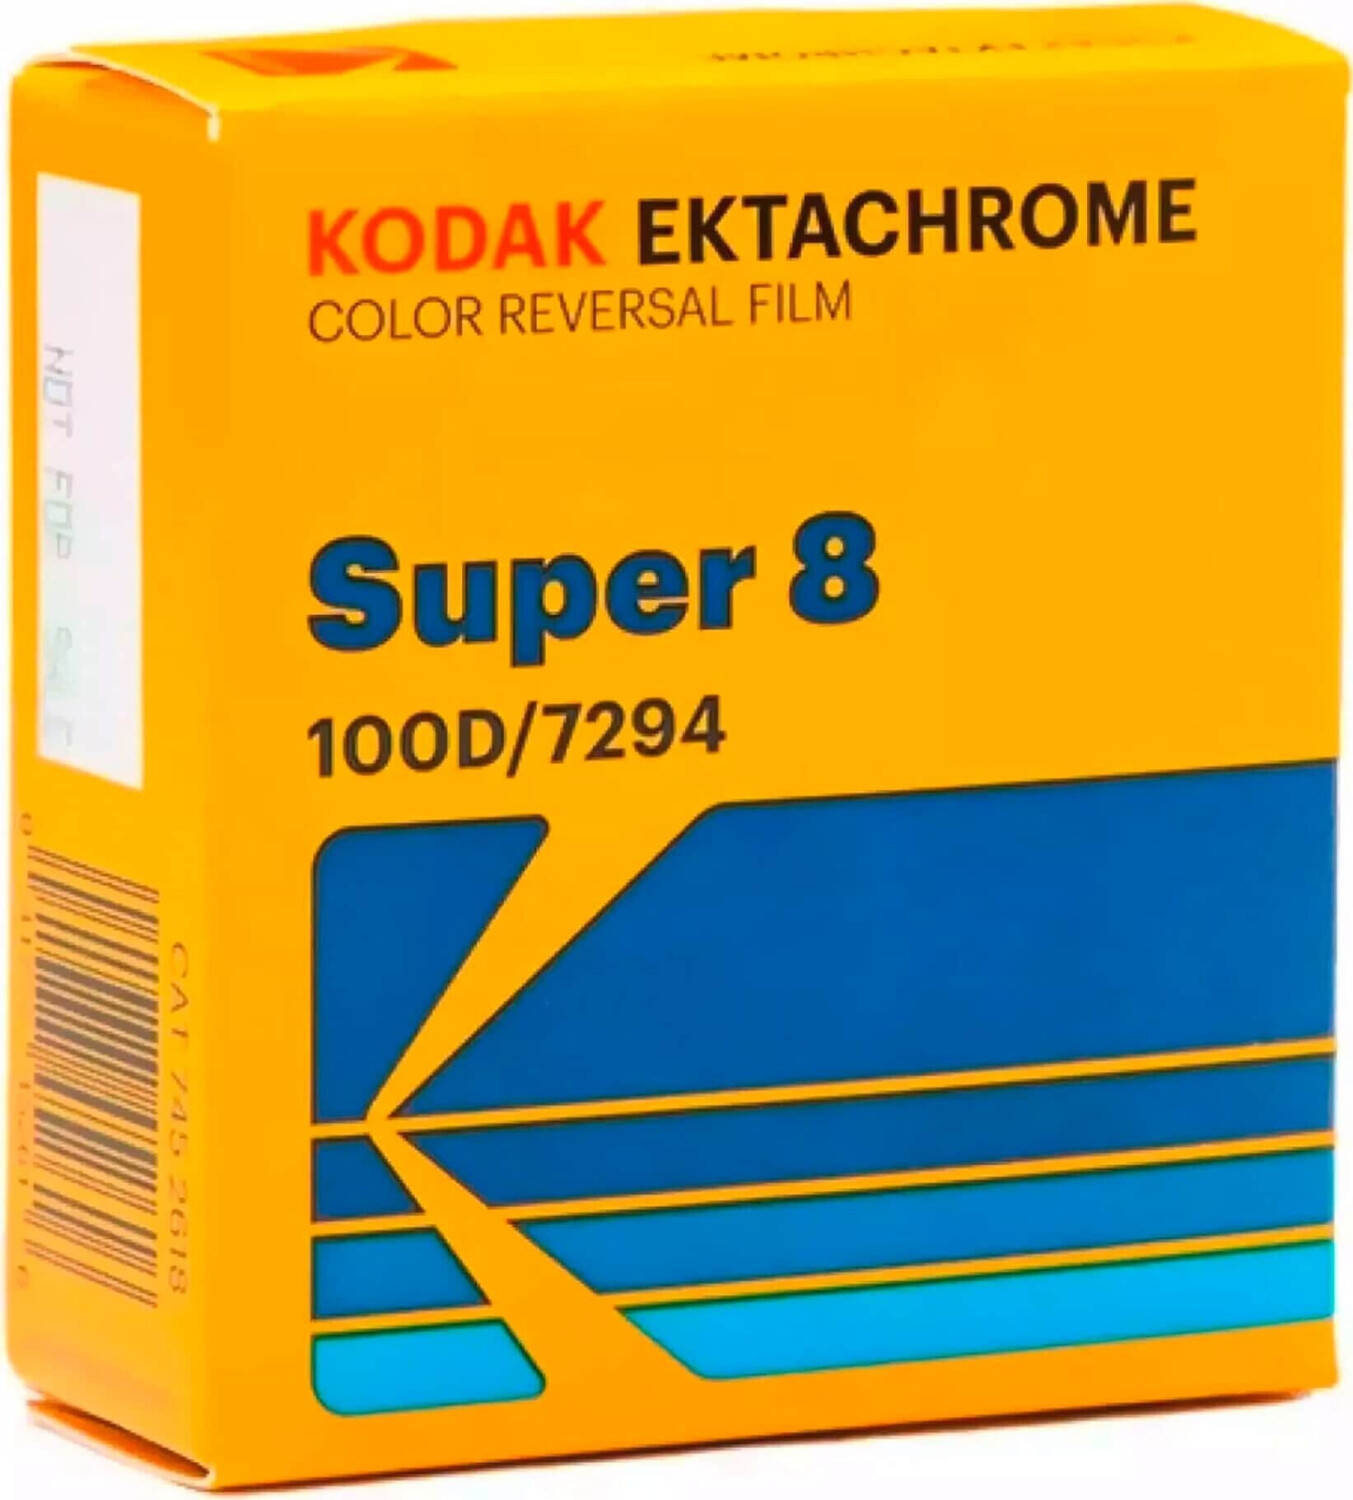 Photos - Other photo accessories Kodak S8 Ektachrome 100D 